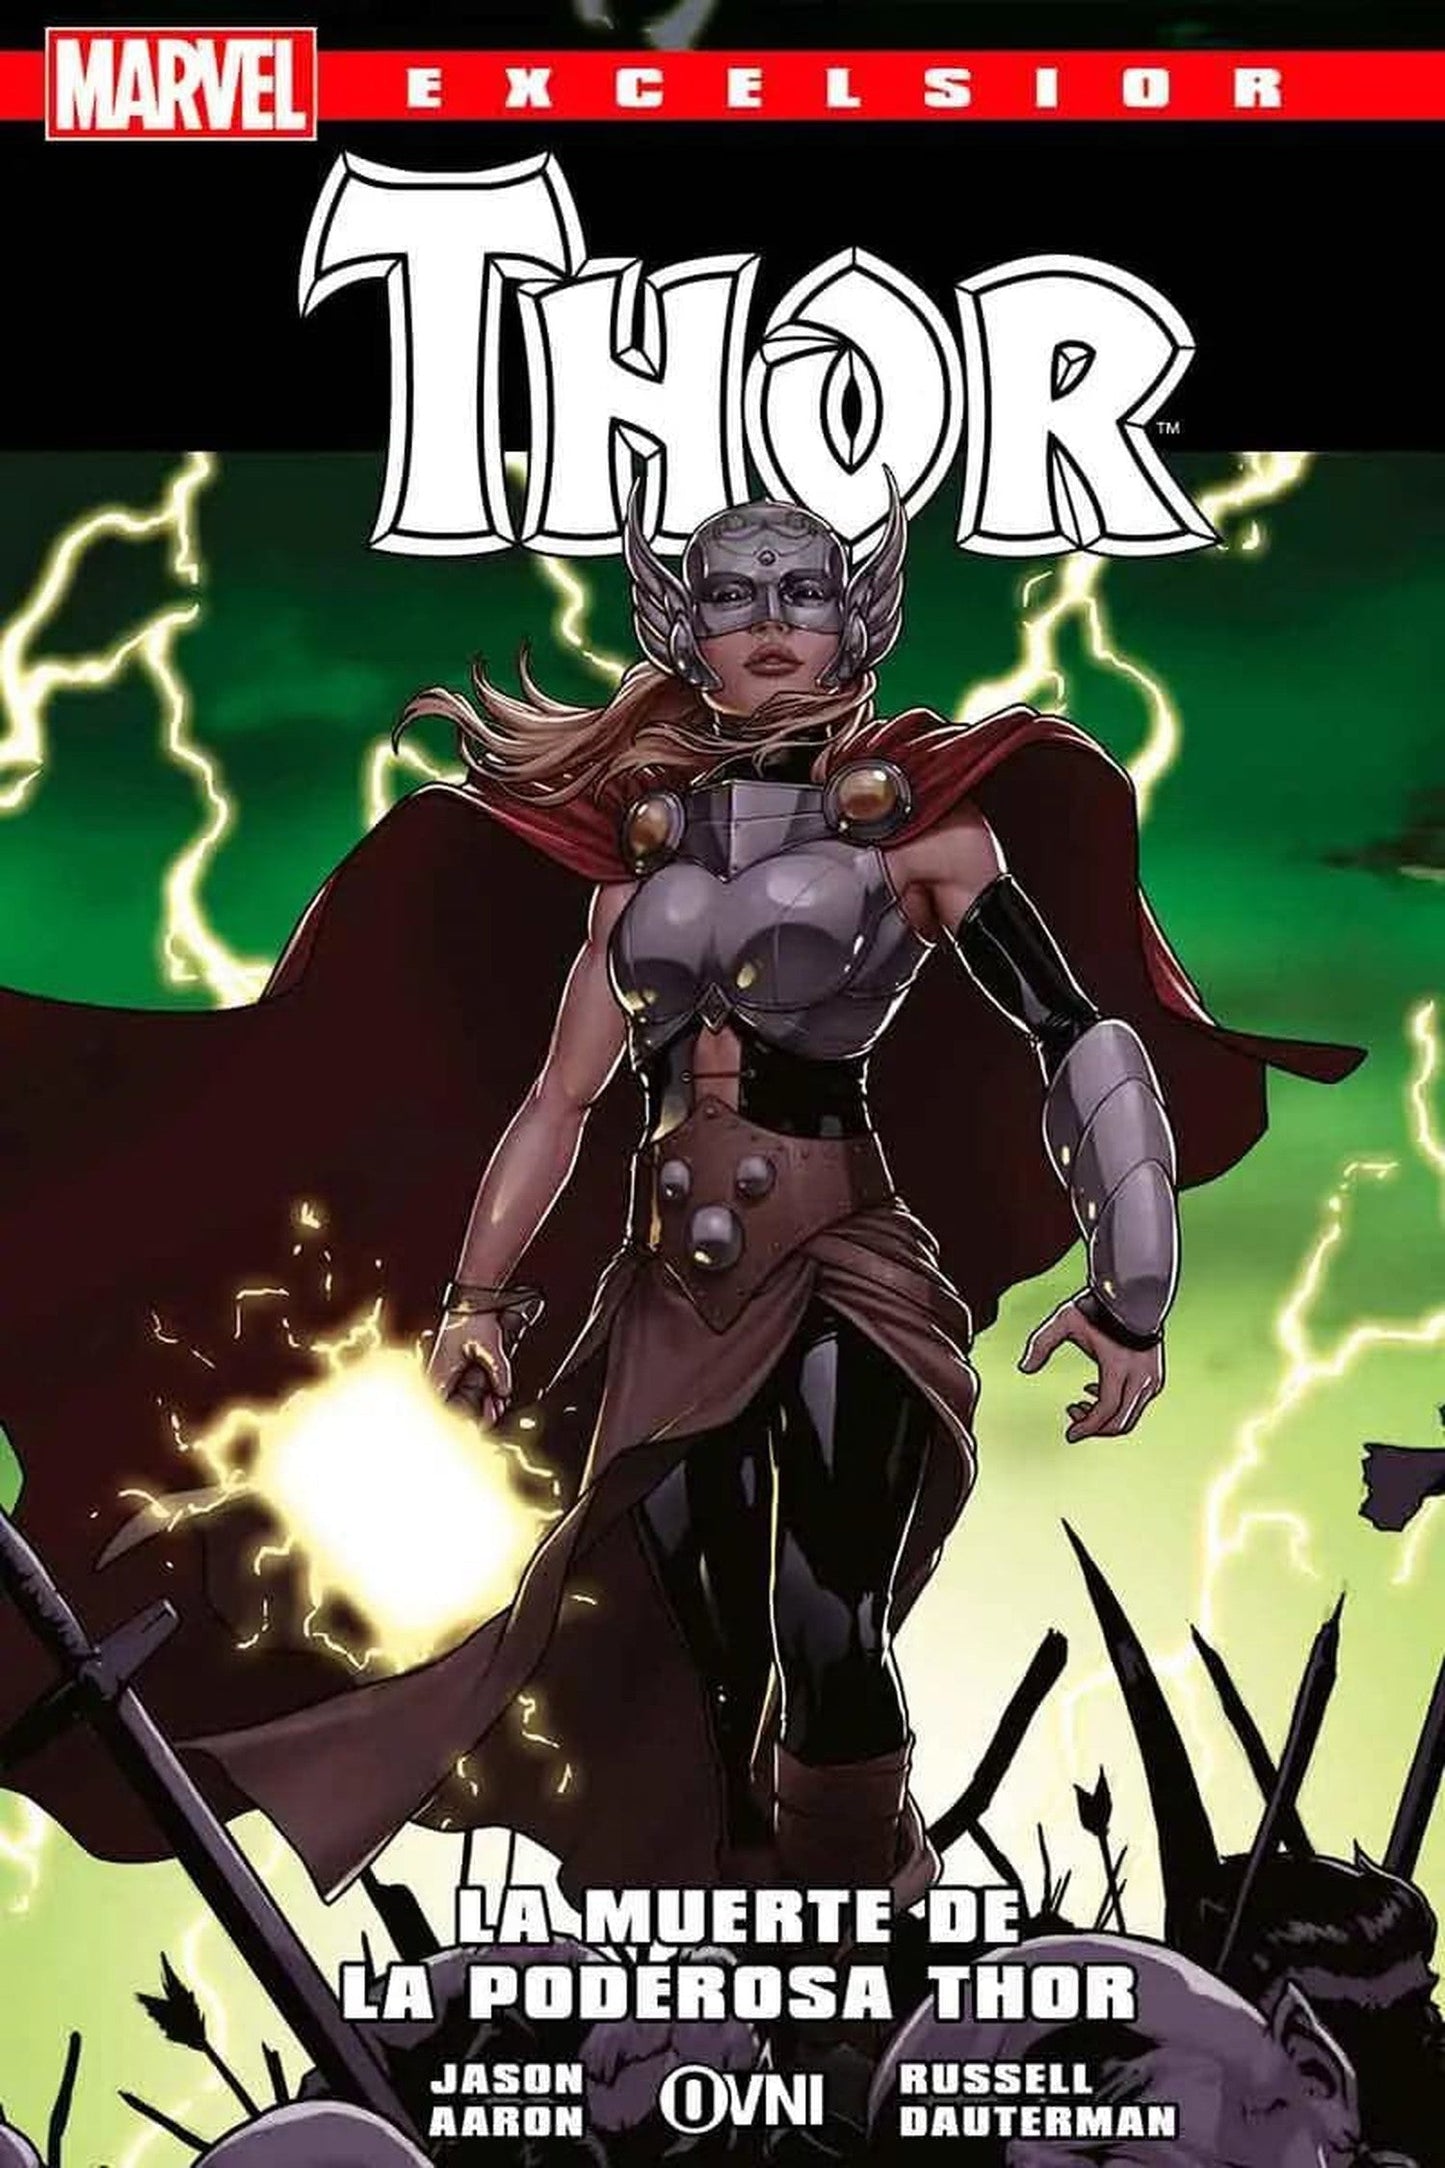 La Muerte de la Poderosa Thor